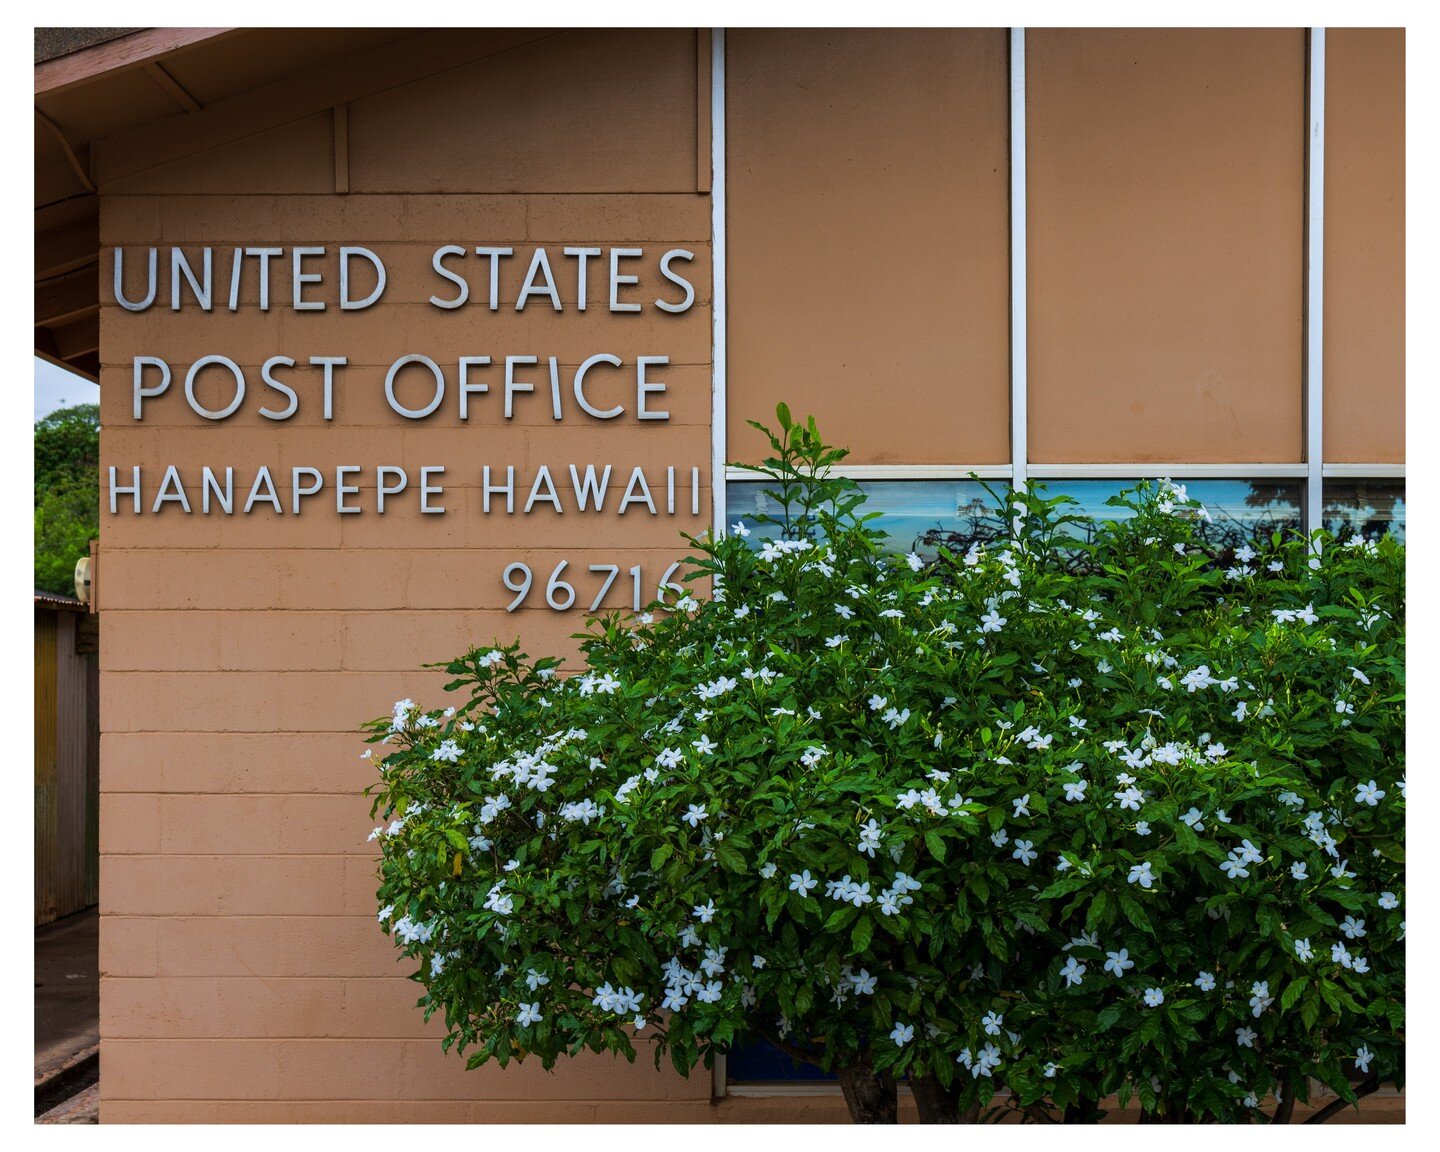 Post office in Hanapepe, Hawaii, Kauai. #hanapepe #liloandstitch #hawaii #kauai #usps #postoffice #canonr5 #urbanphotography #travel #travelphotography